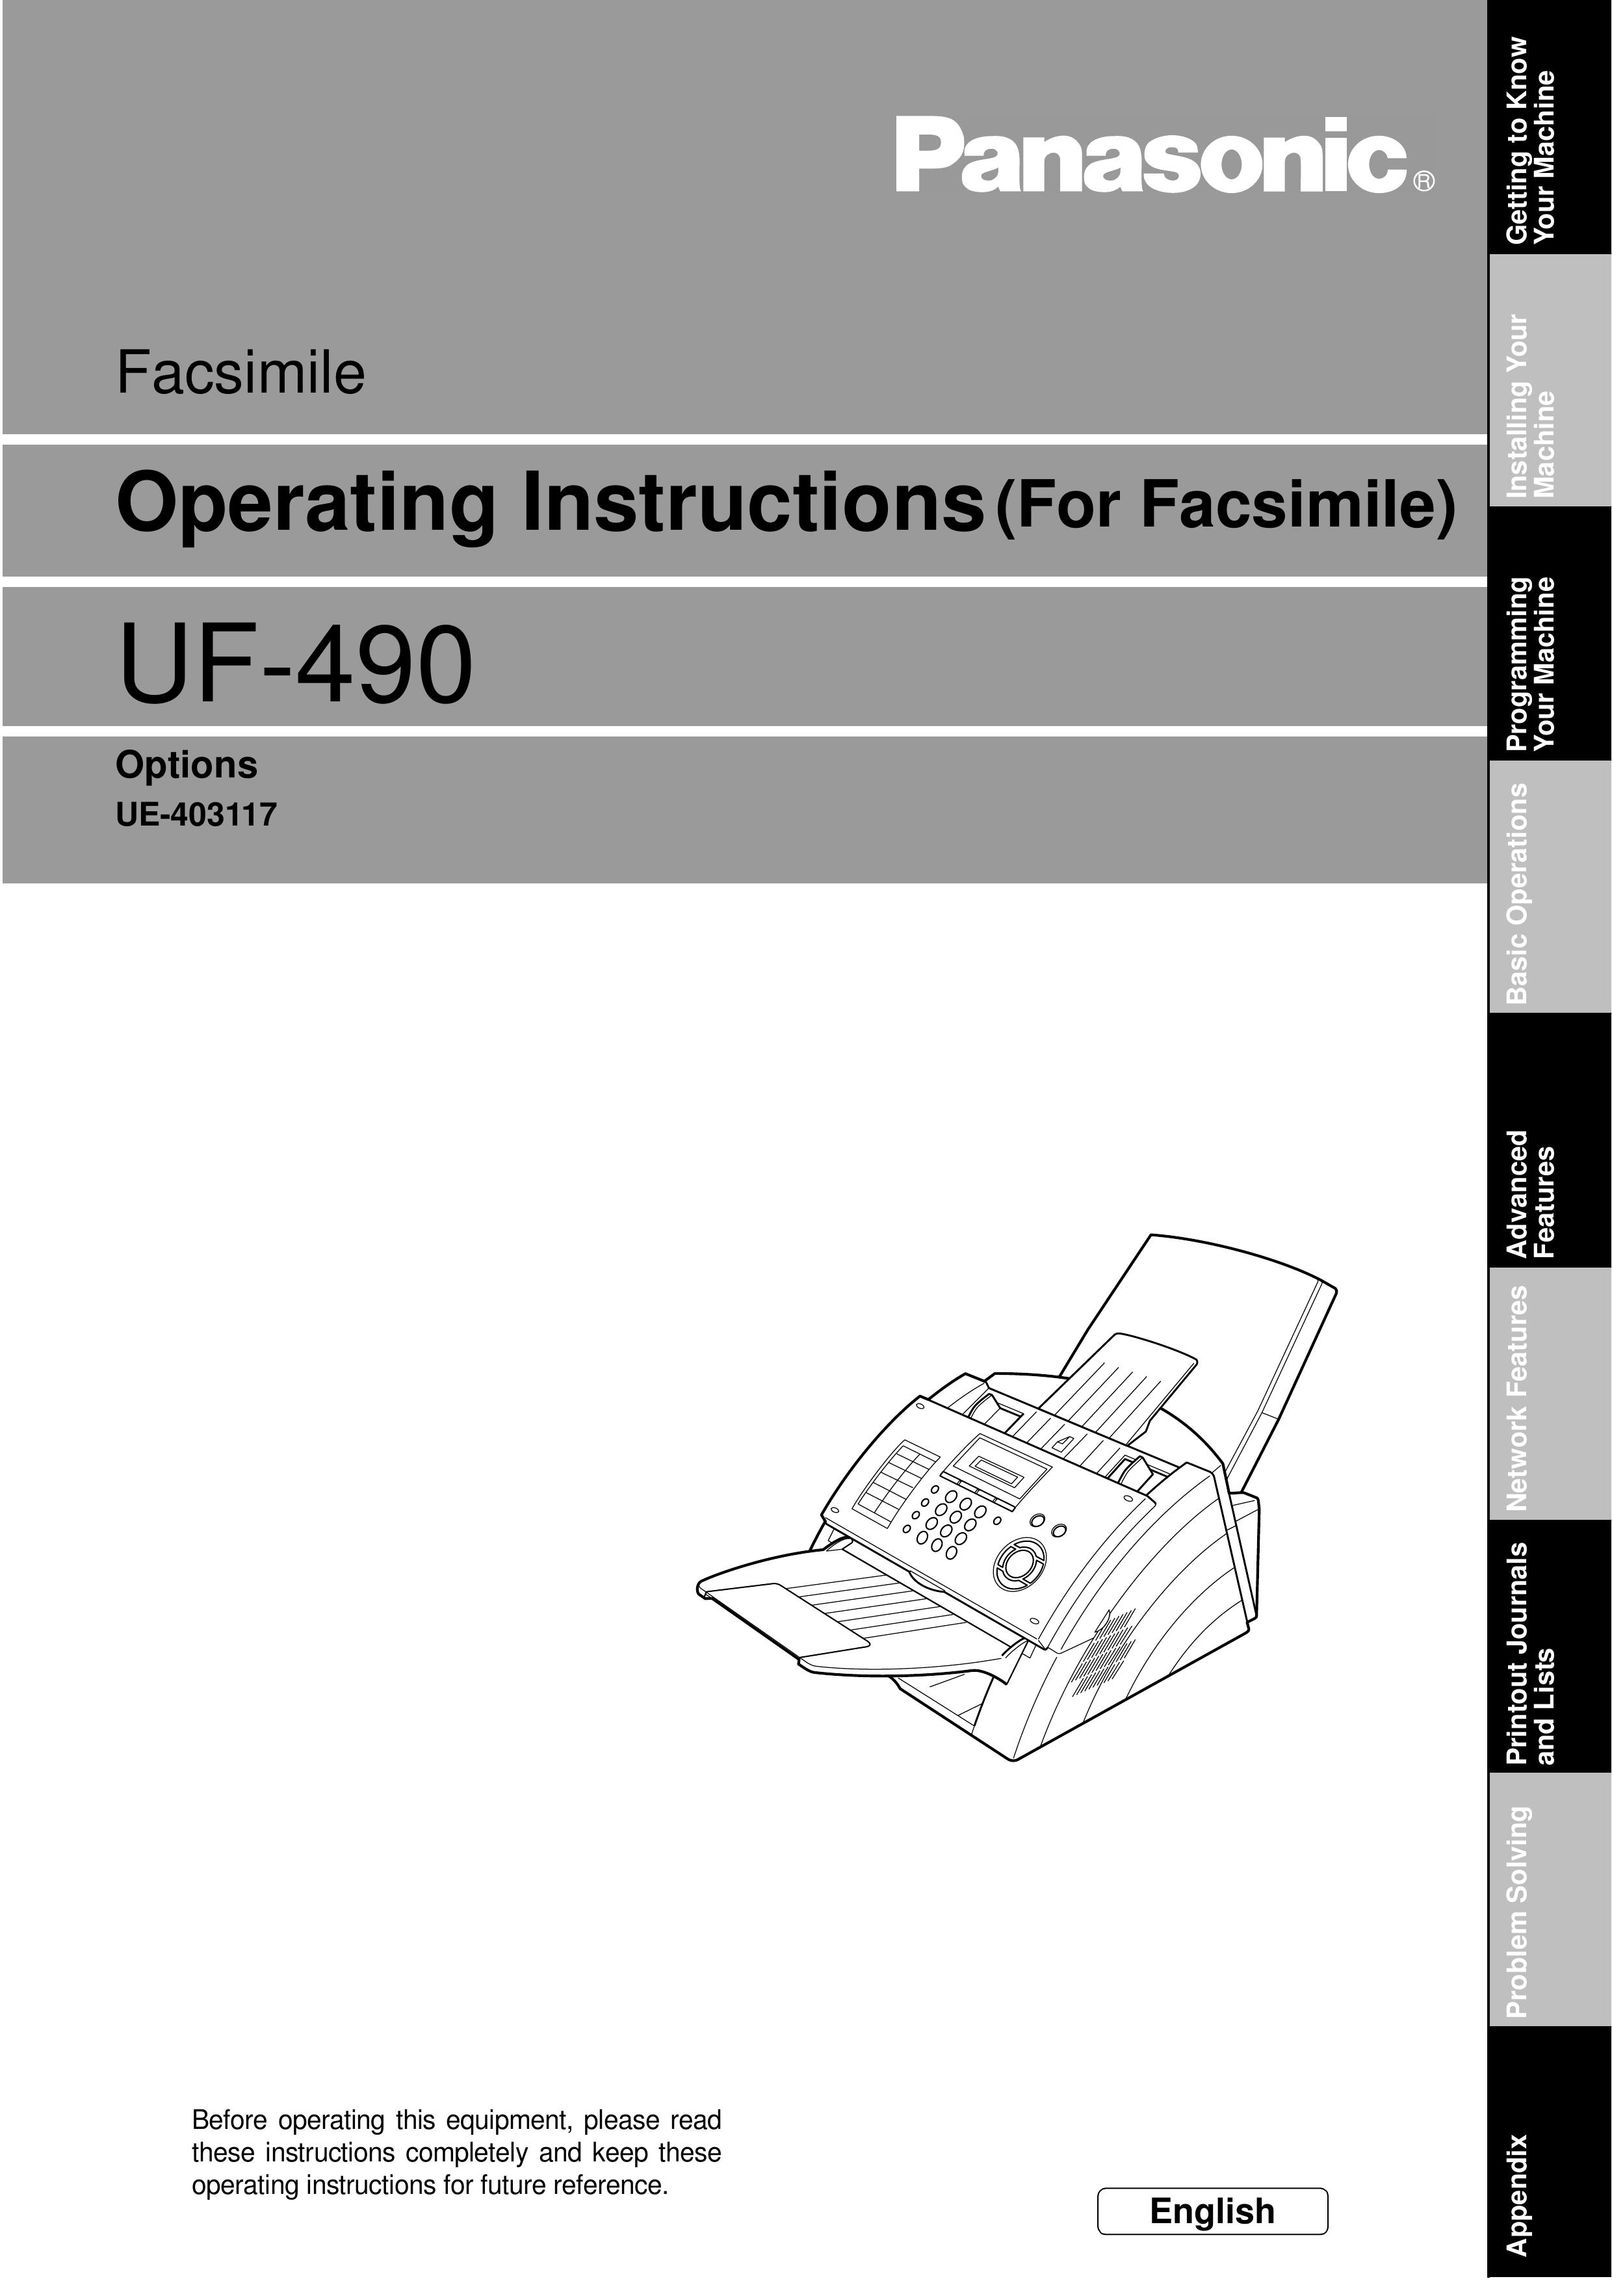 Castelle UF-490 Fax Machine User Manual